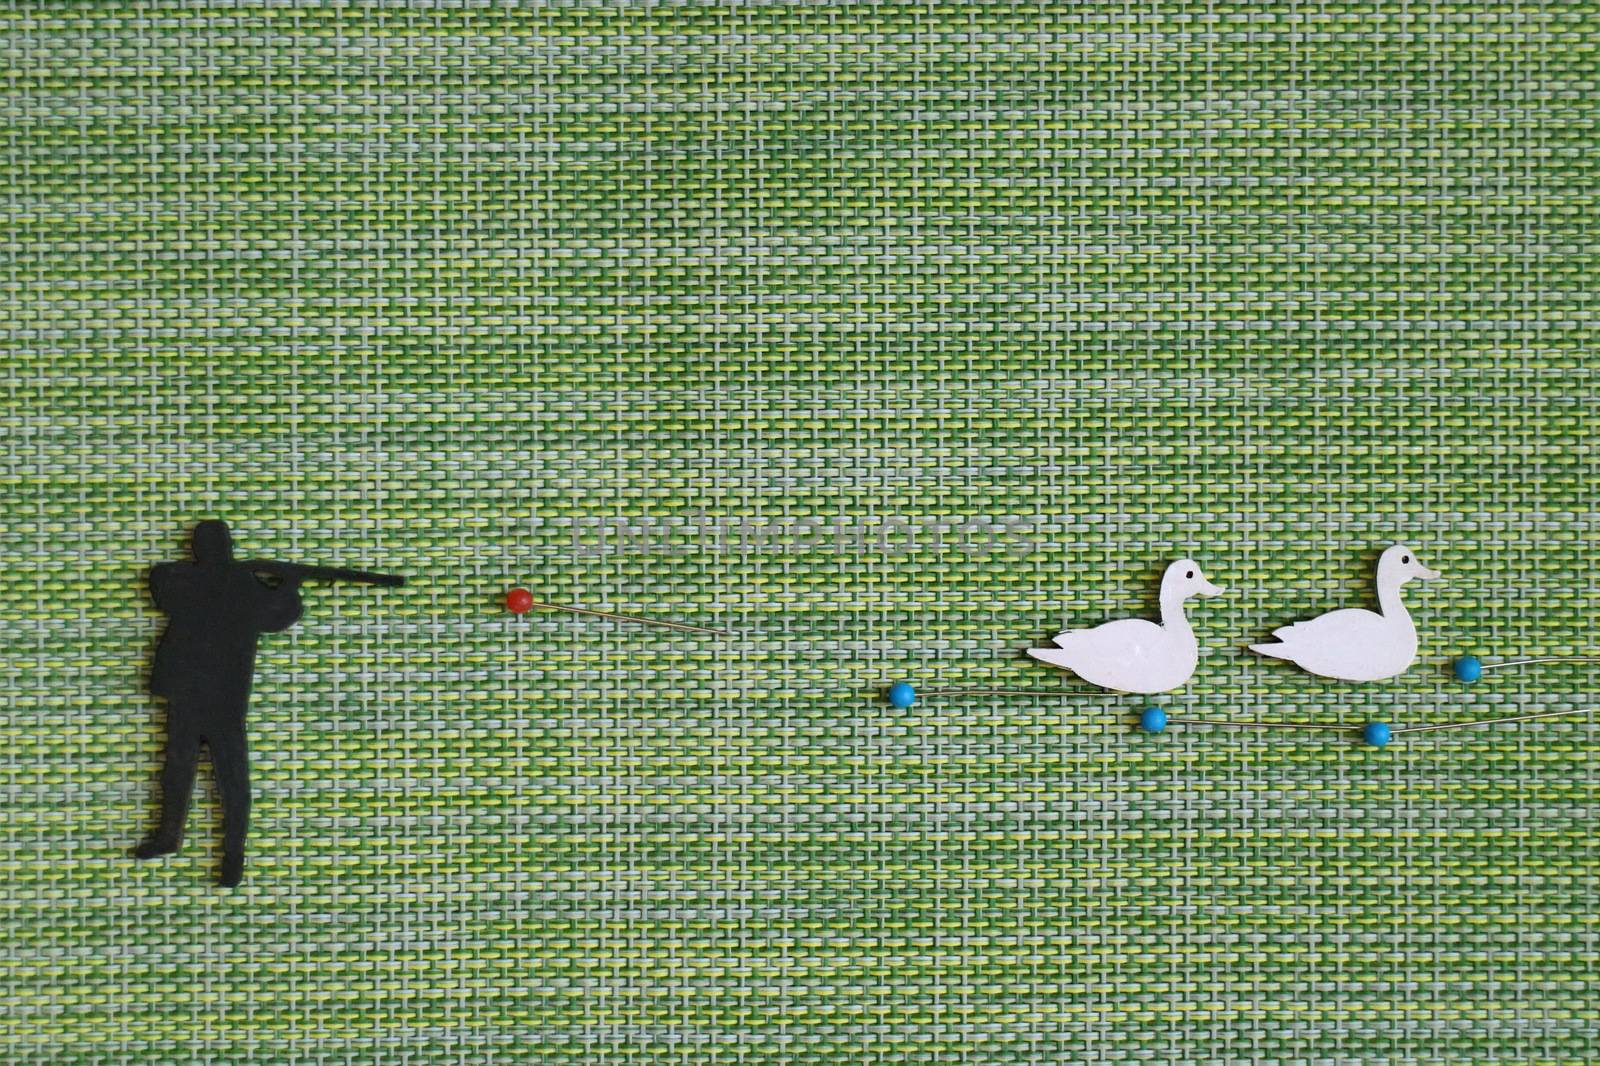 hunter shoot bullet white ducks flat lay, copy space, minimal concept